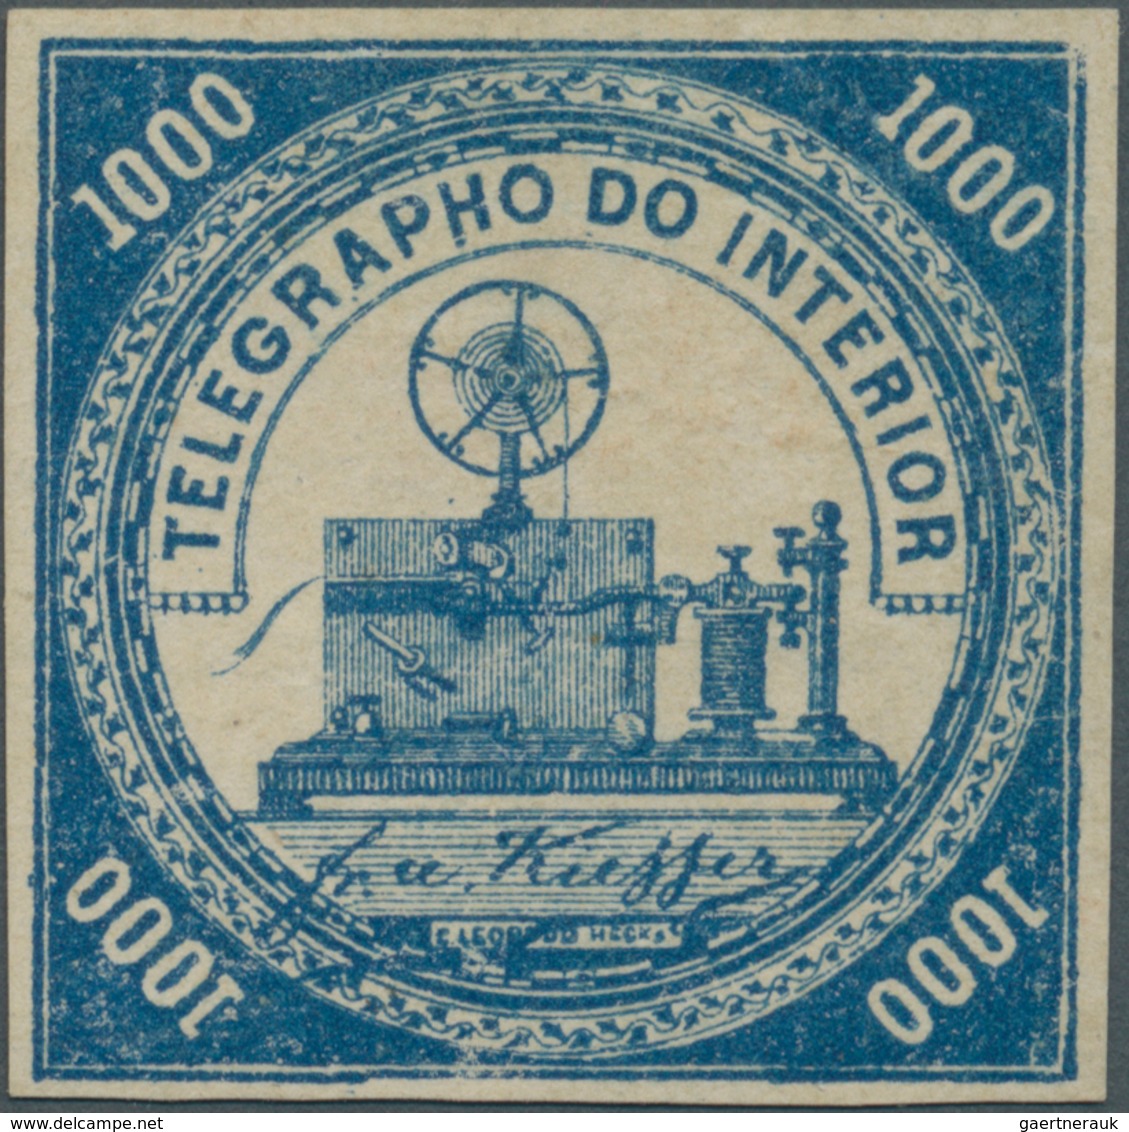 Brasilien - Telegrafenmarken: 1873, 1000r. Blue, Wm "Lacroix Freres", Fresh Colour, Full Margins, Un - Telegraphenmarken